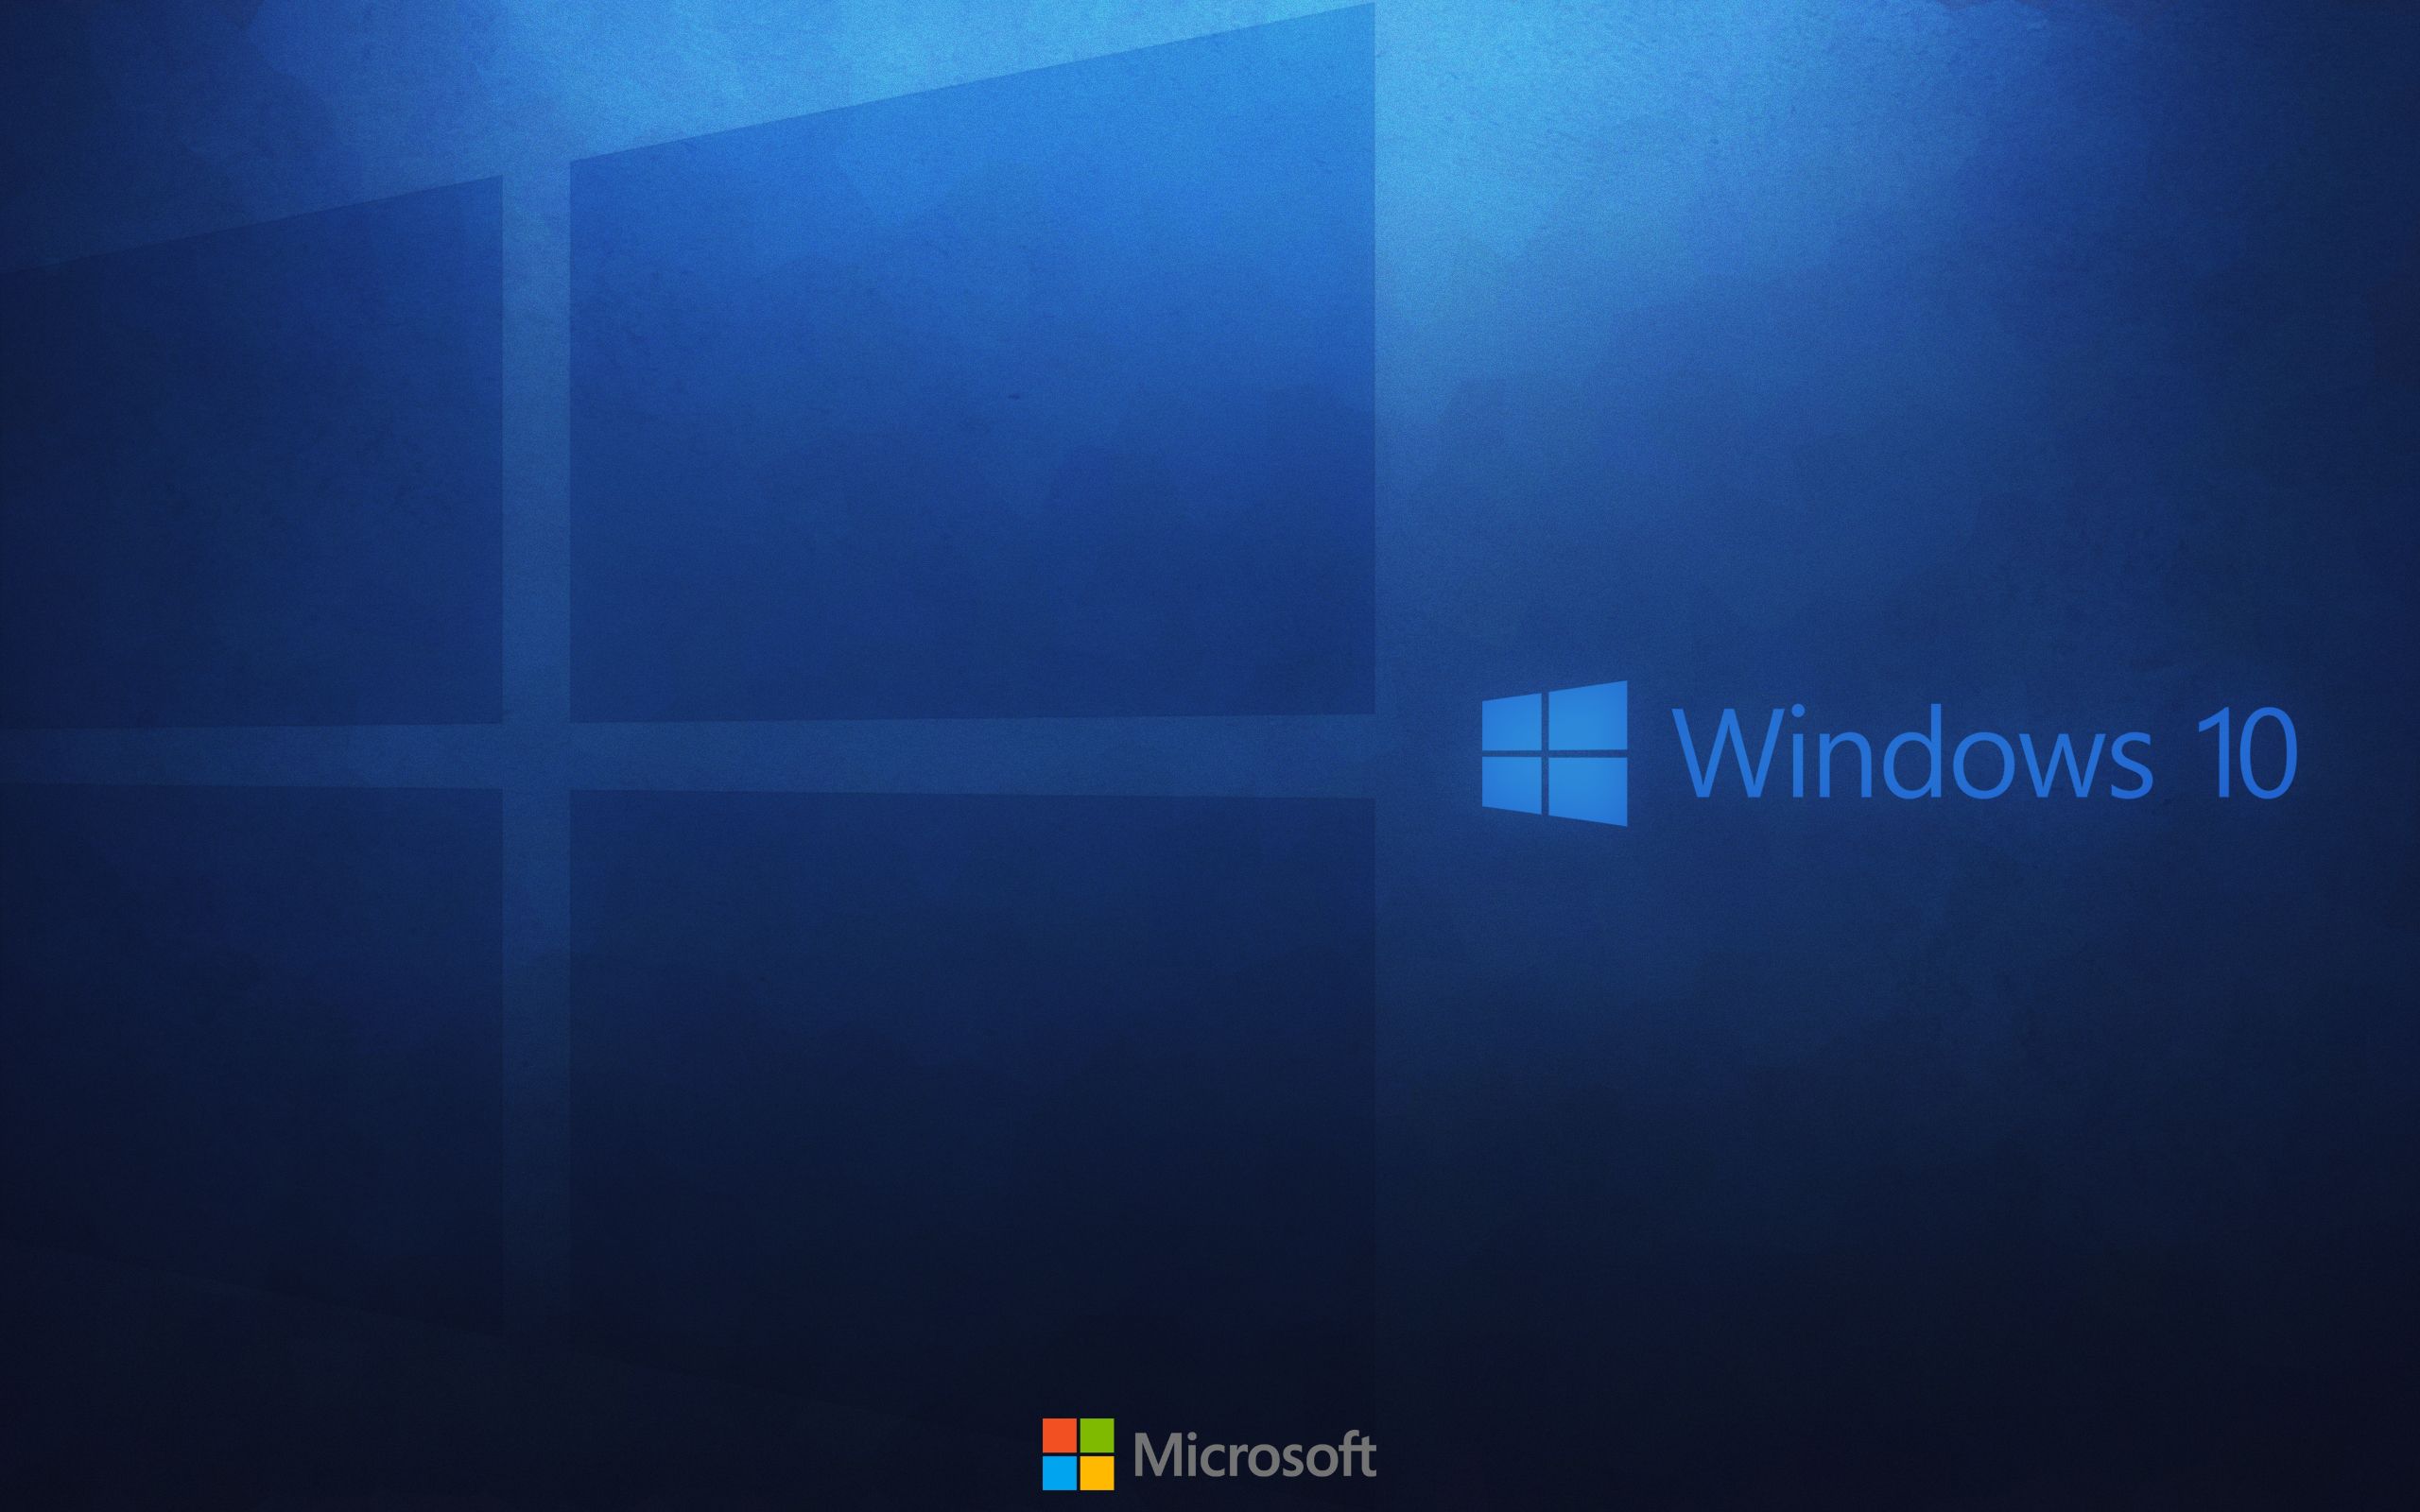 Windows 10 Microsoft Operating System Wallpaper, HD Hi Tech 4K Wallpaper, Image, Photo And Background